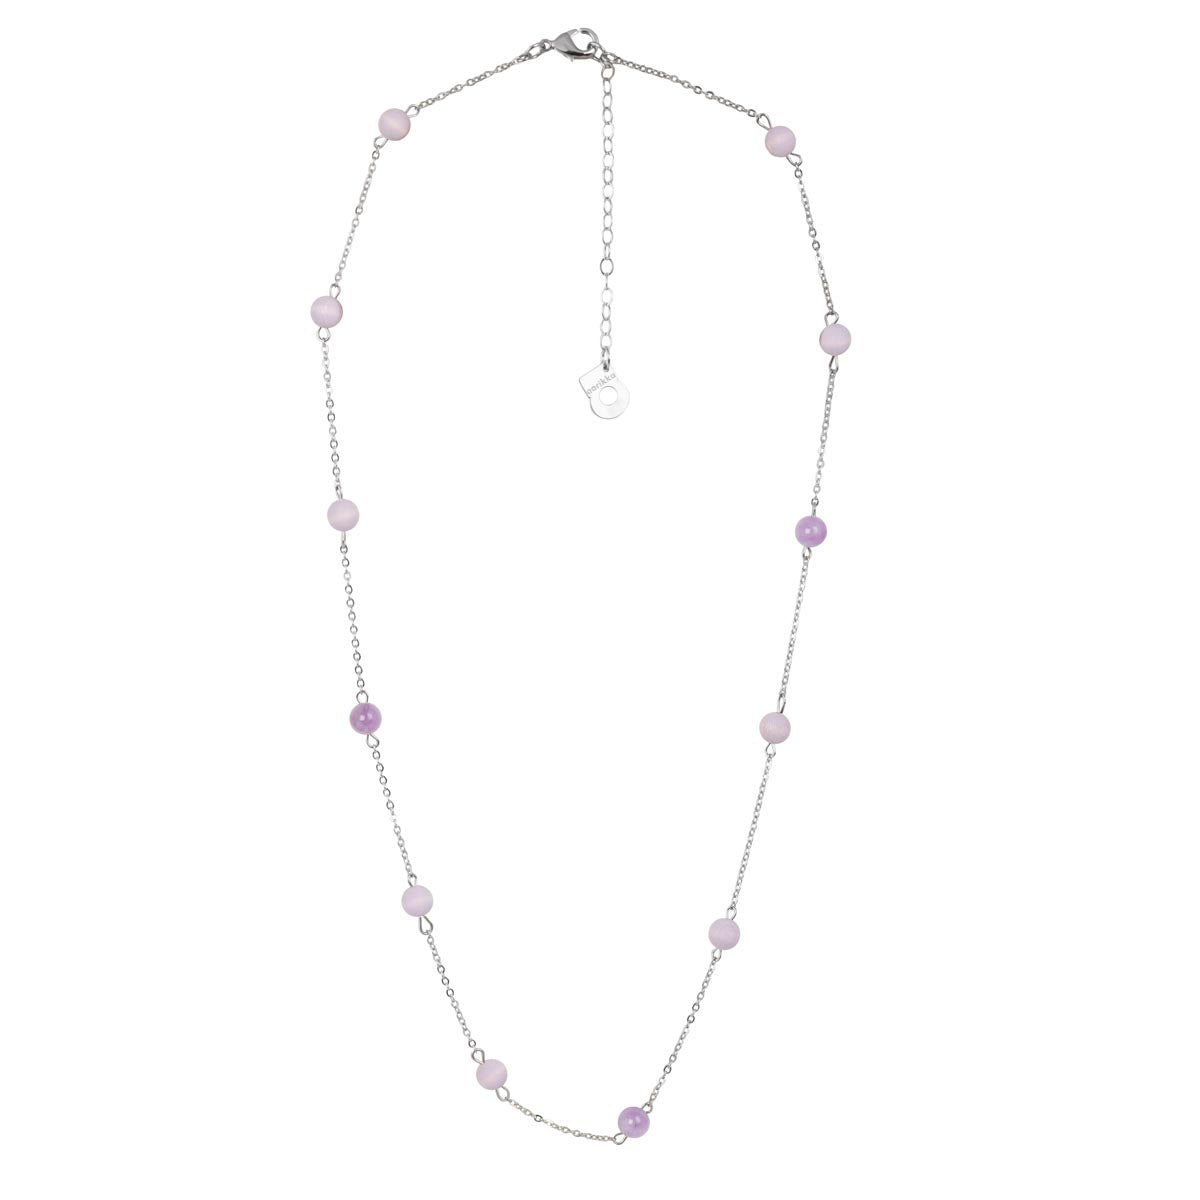 Jade necklace, lavender